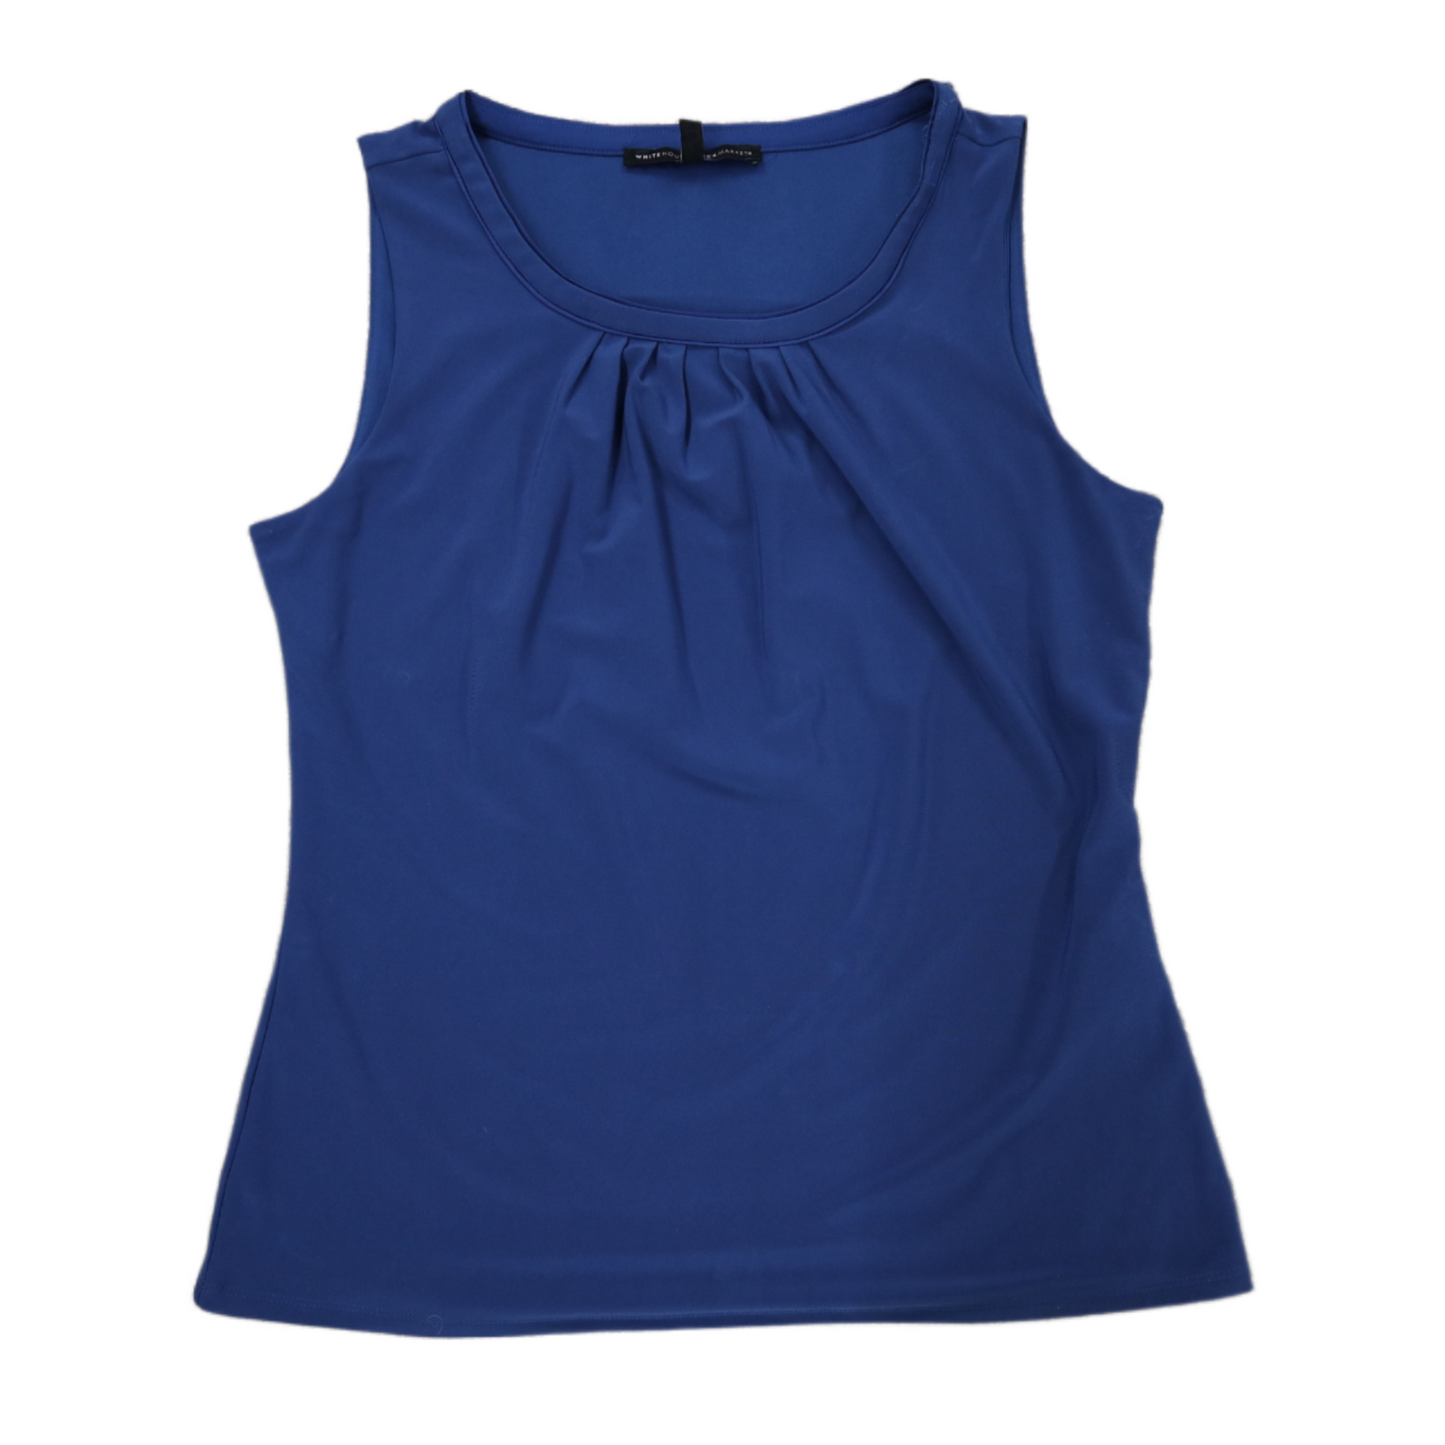 White House Black Market Womens Blouse Top Sleeveless Pullover Navy Blue Size M